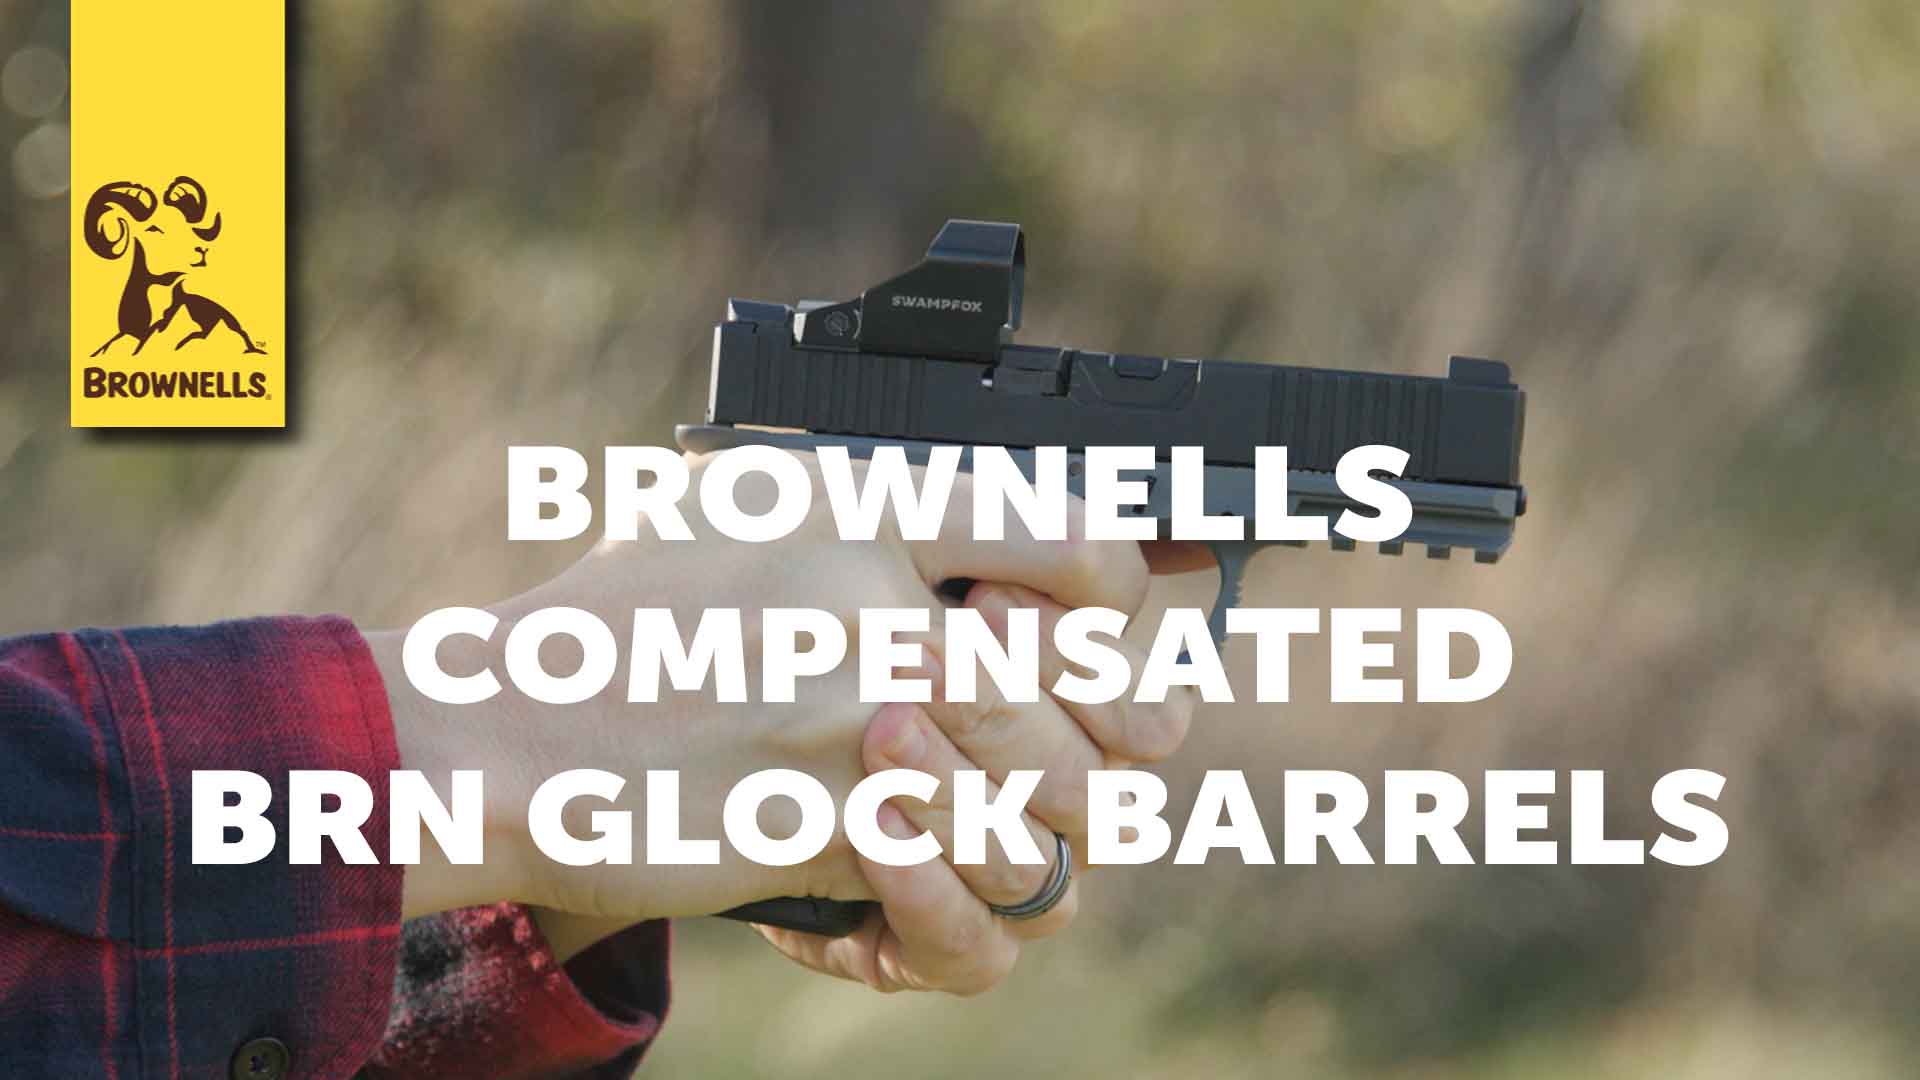 Product Spotlight: Brownells Compensated Glock Barrels